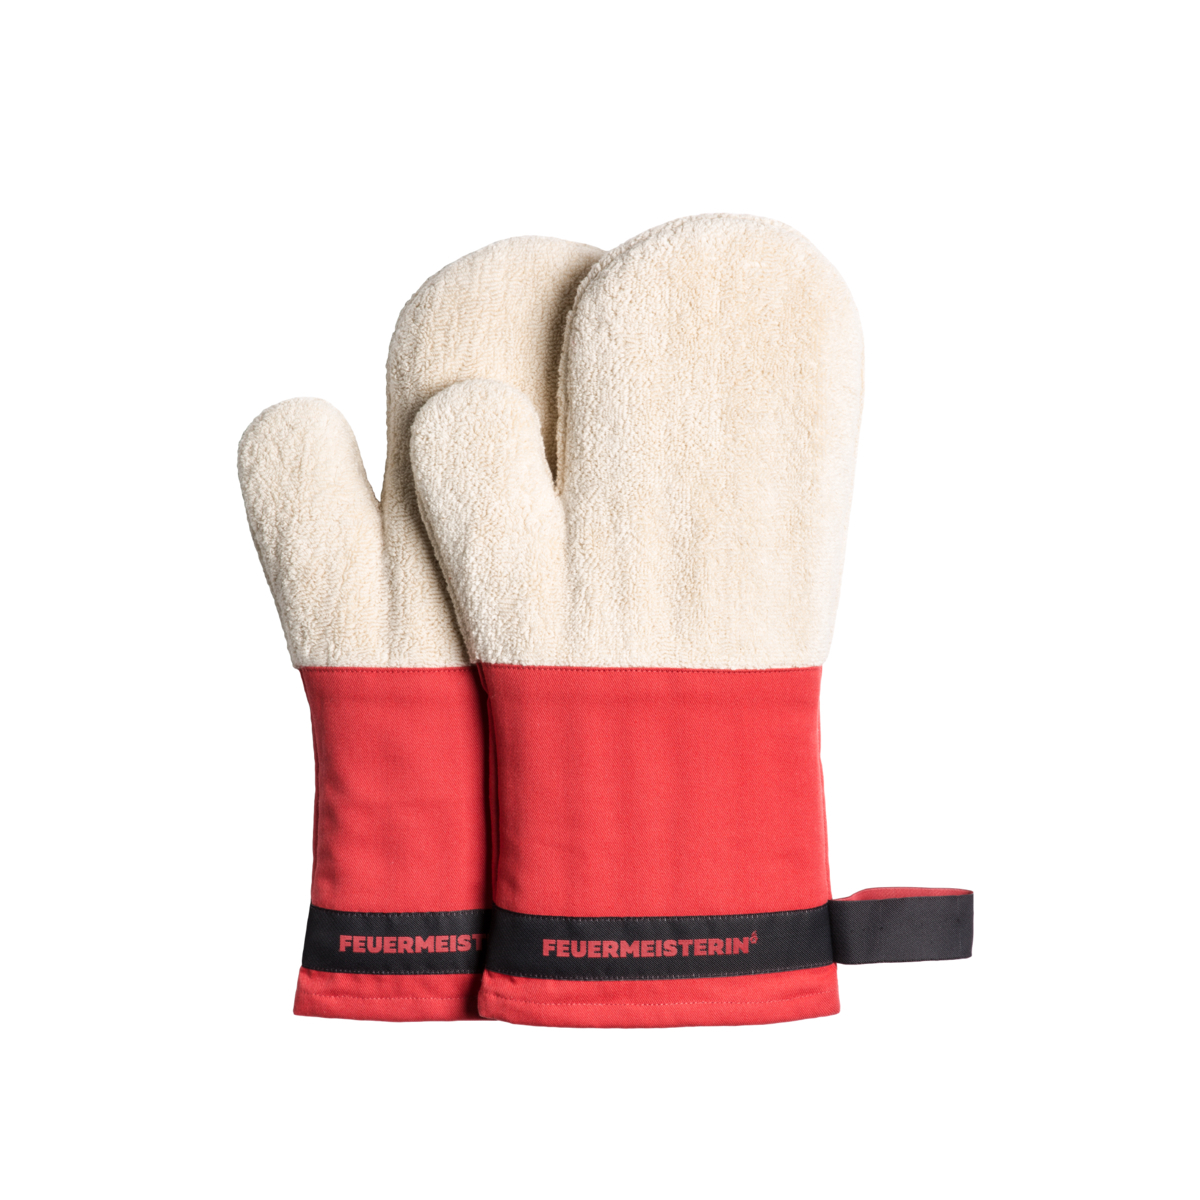 Kuchyňské rukavice Feuermeister Premium - bílé-červené, 12